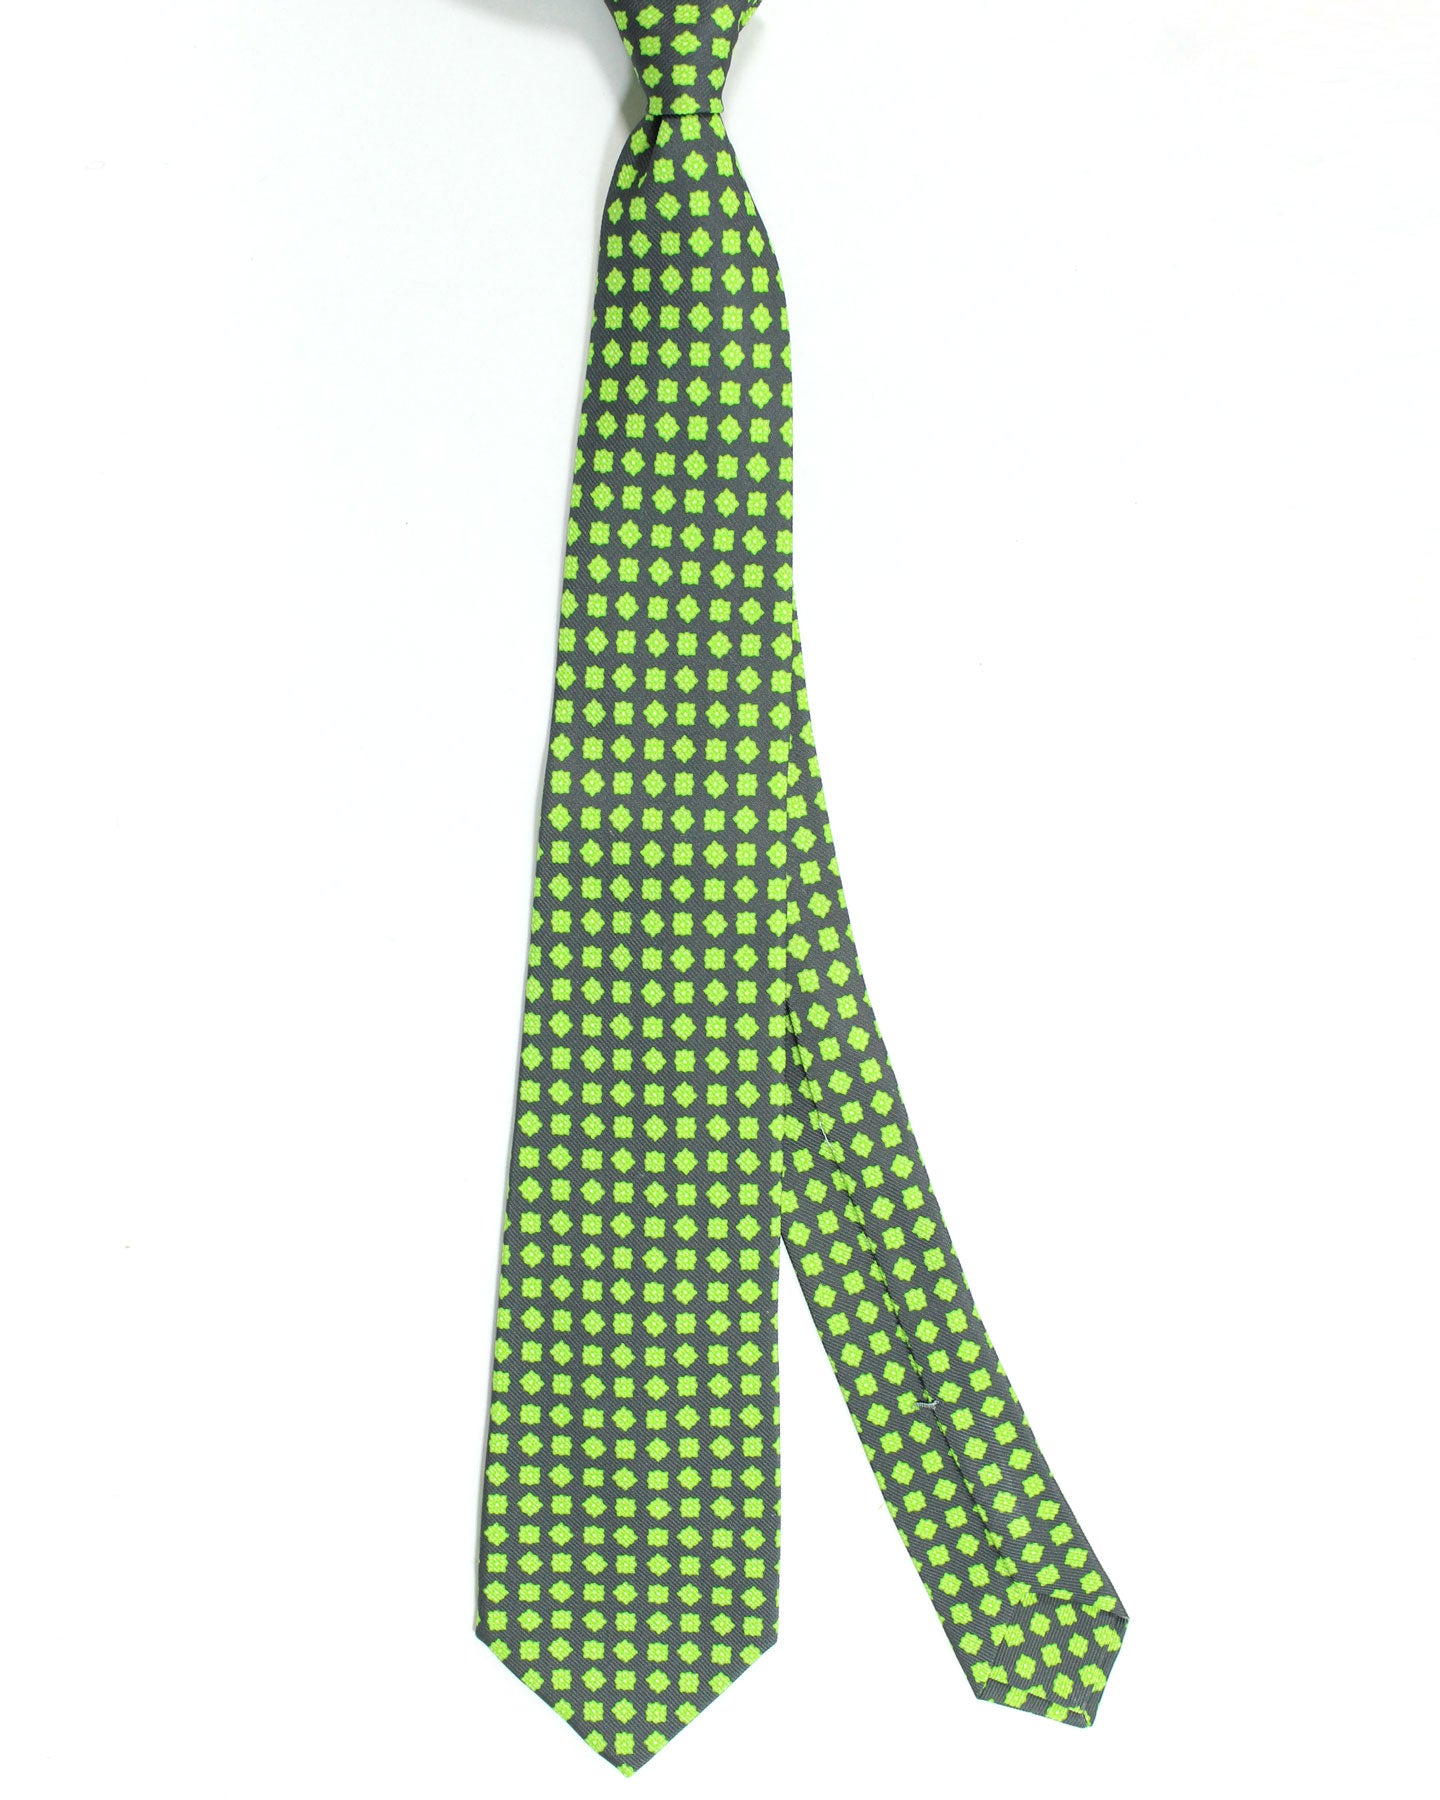 Kiton Silk Tie Lime Green Geometric Design - Sevenfold Necktie